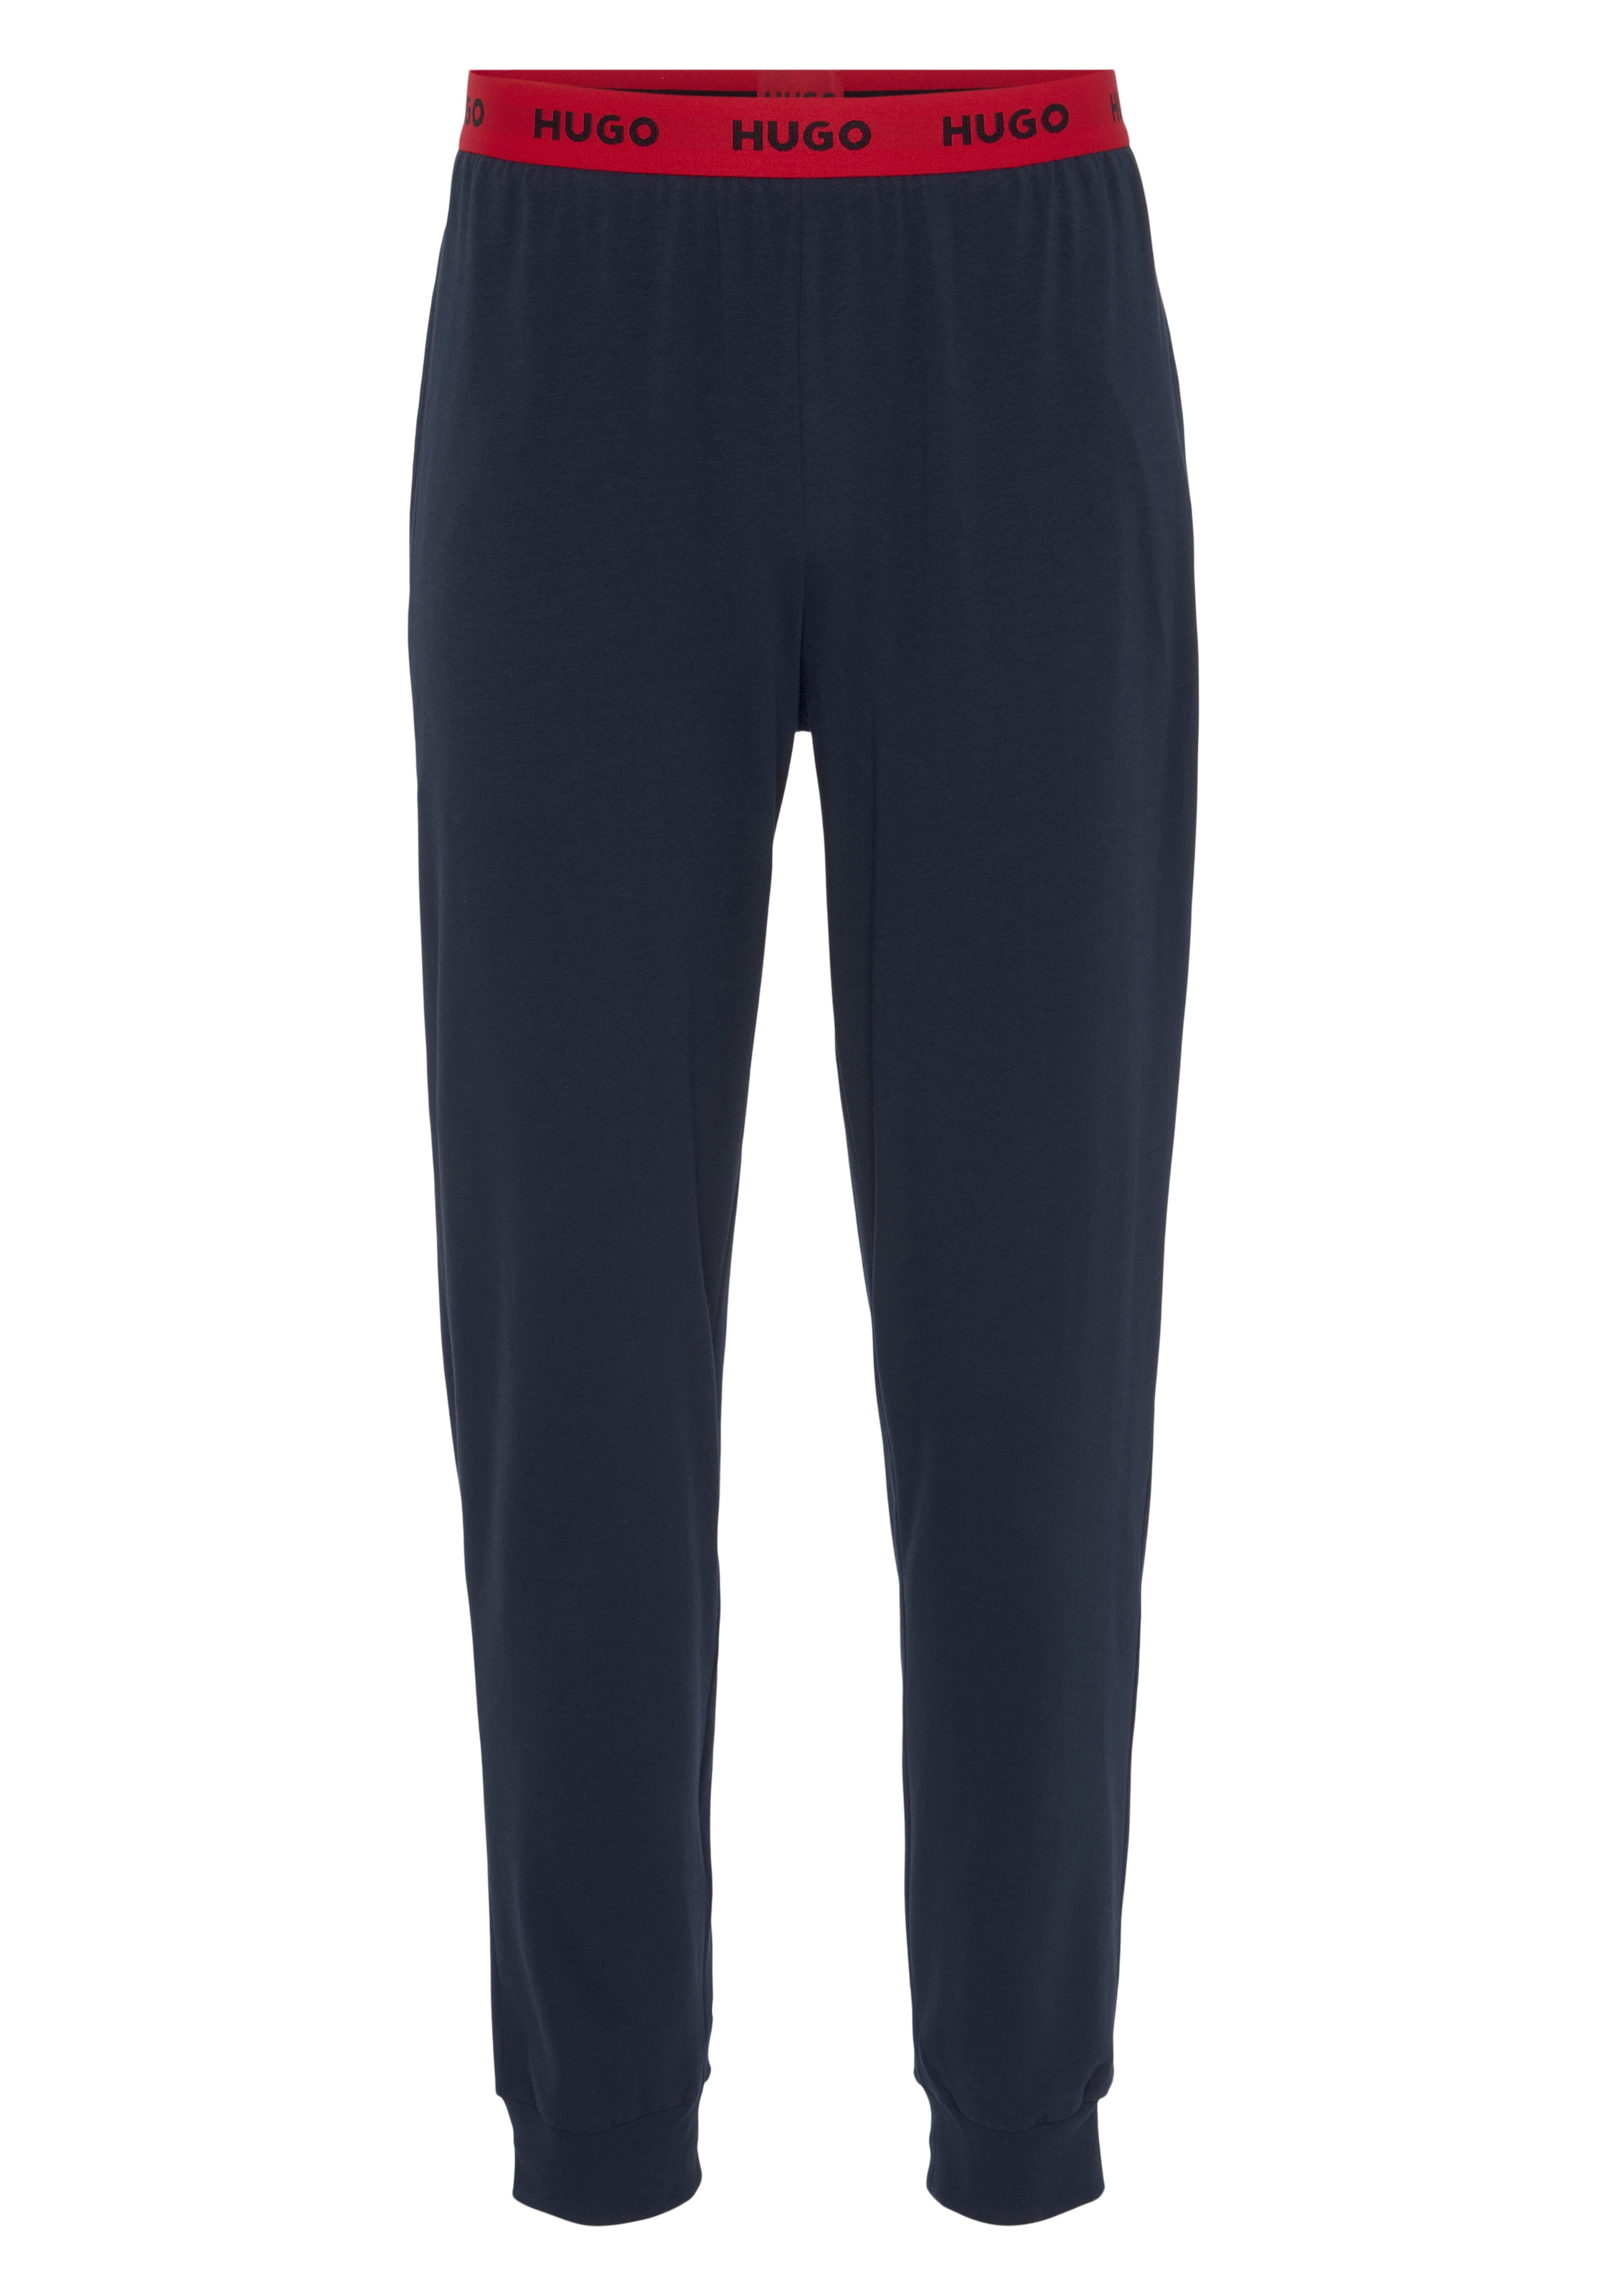 HUGO Pyjamahose »Linked ♕ mit kontrastfarbenen bei Pants«, Logo-Elastikbund